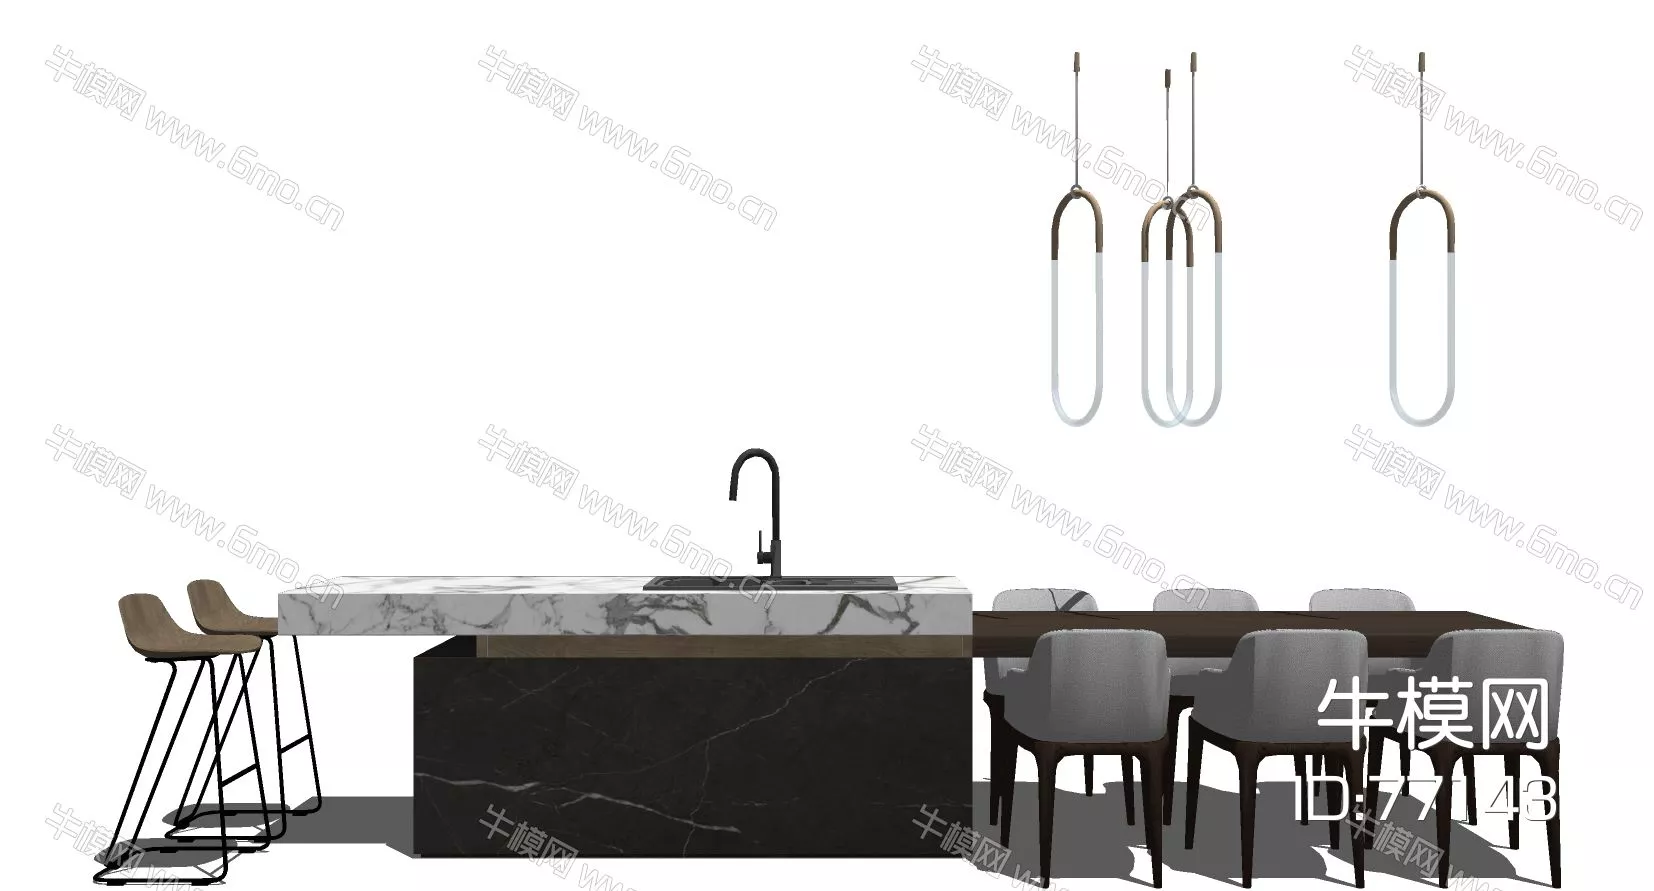 NORDIC DINING TABLE SET - SKETCHUP 3D MODEL - ENSCAPE - 77143